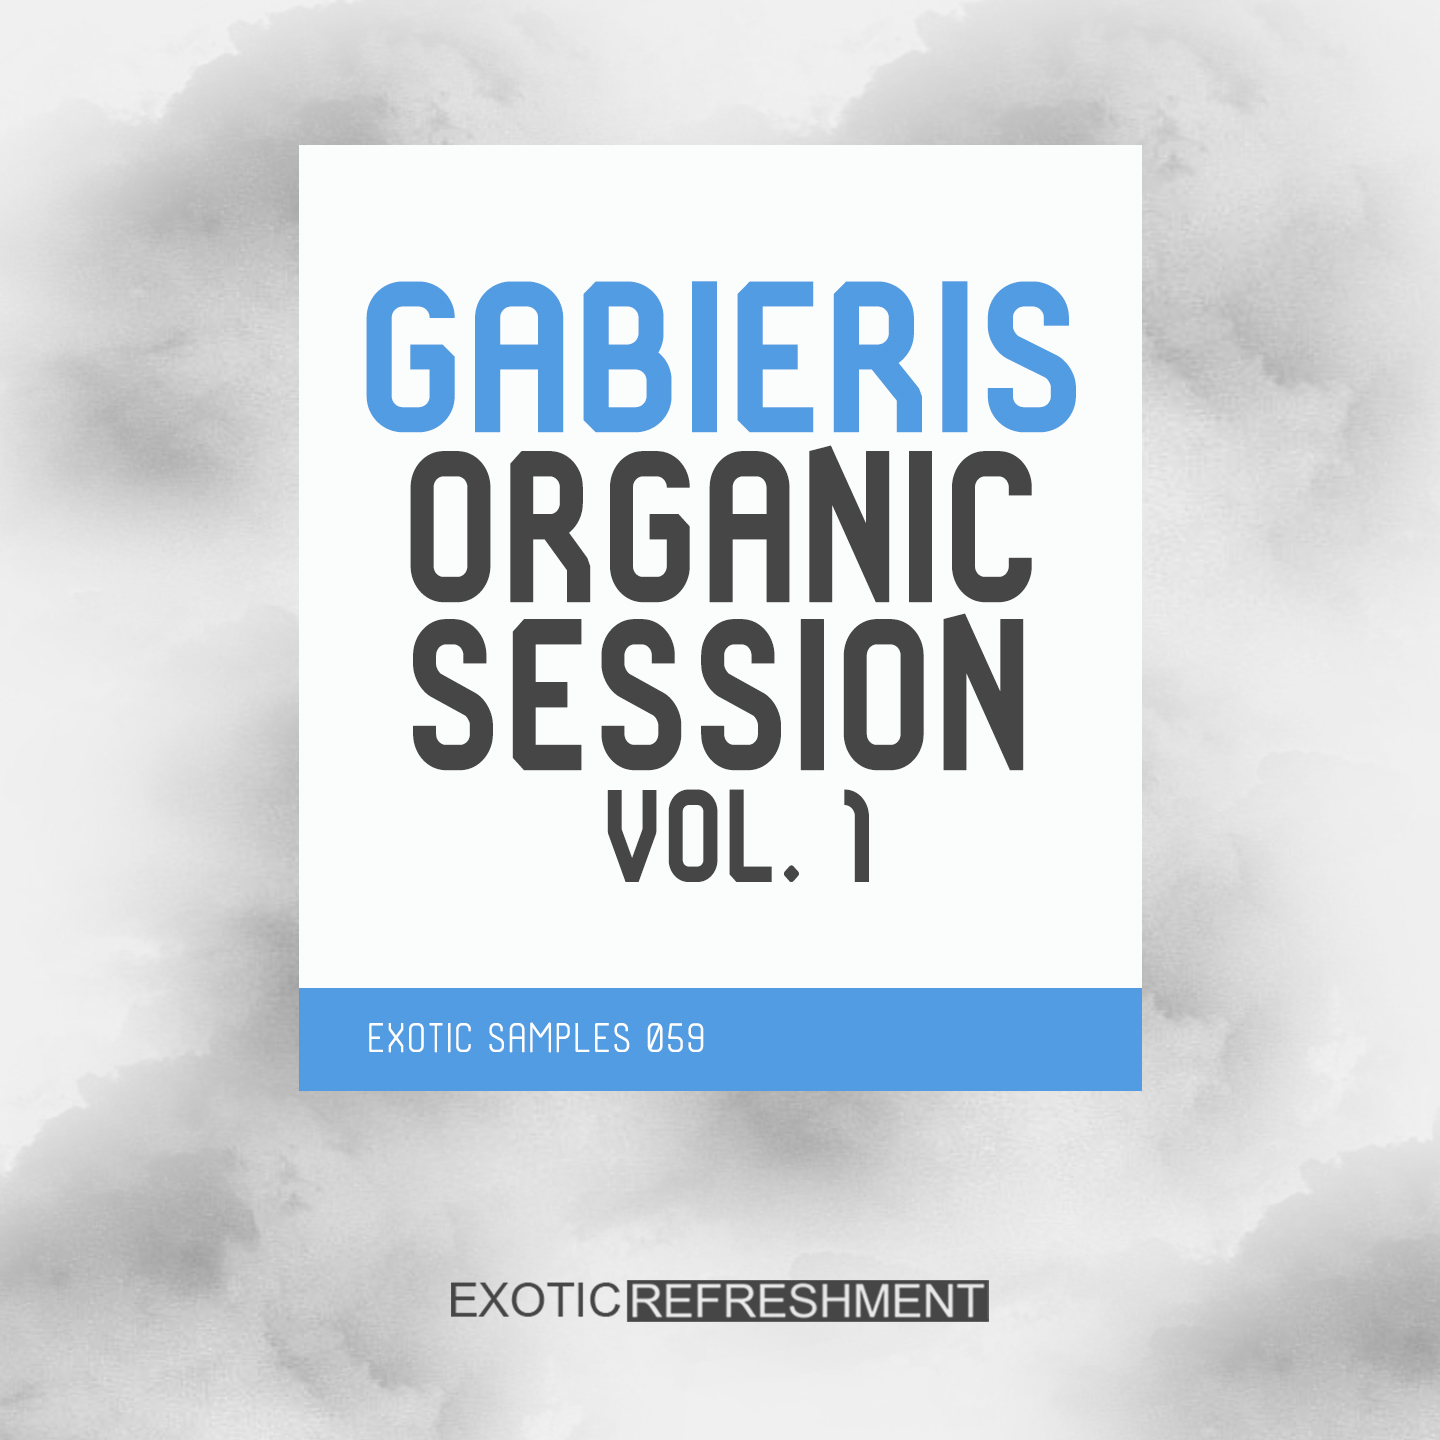 Gabieris Organic Session vol. 1